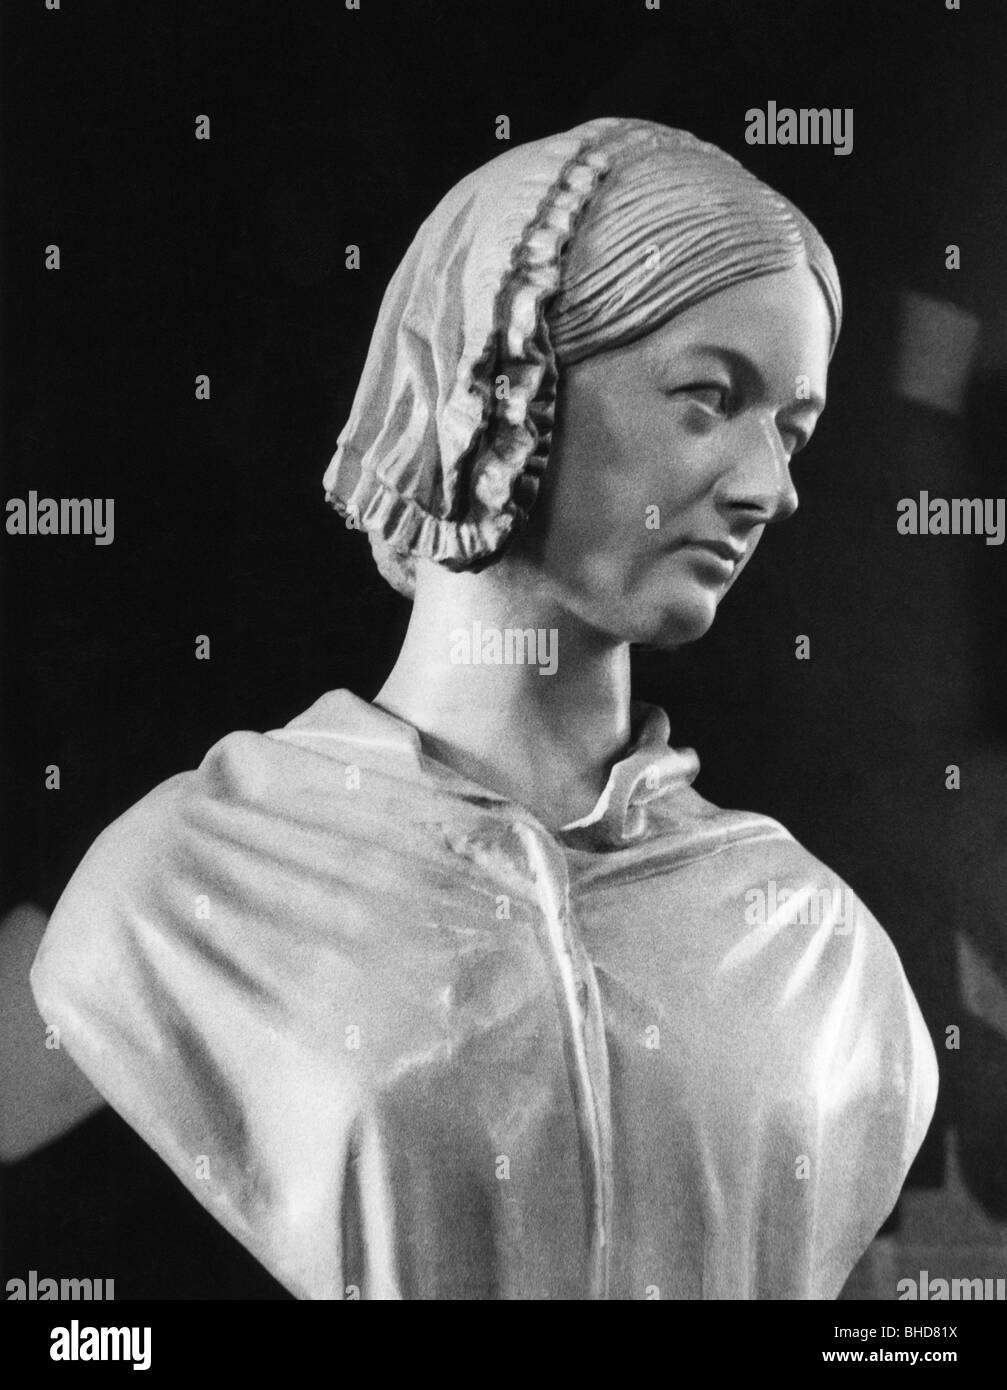 Nightingale, Florence, 15.5.1820 - 13.8.1910, British nurse, portrait, bust, sculpture by John Robert Steell, 1862, , Stock Photo